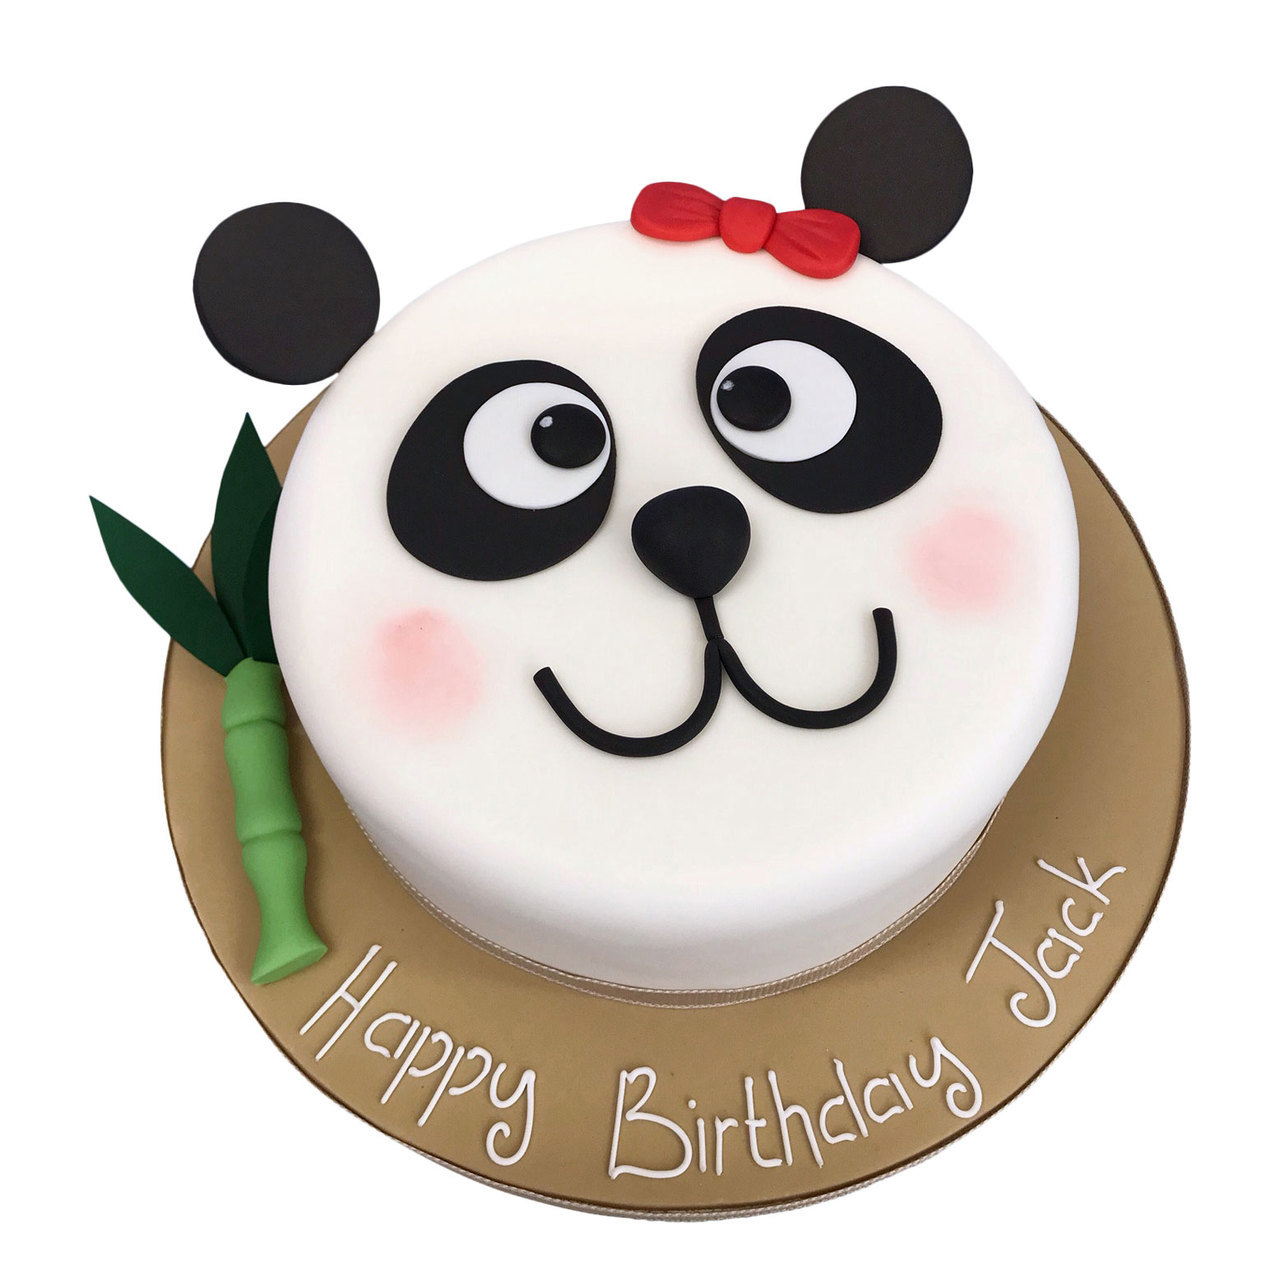 Cute panda cake design 🐼|how to make panda cake design 😍🎂 - YouTube